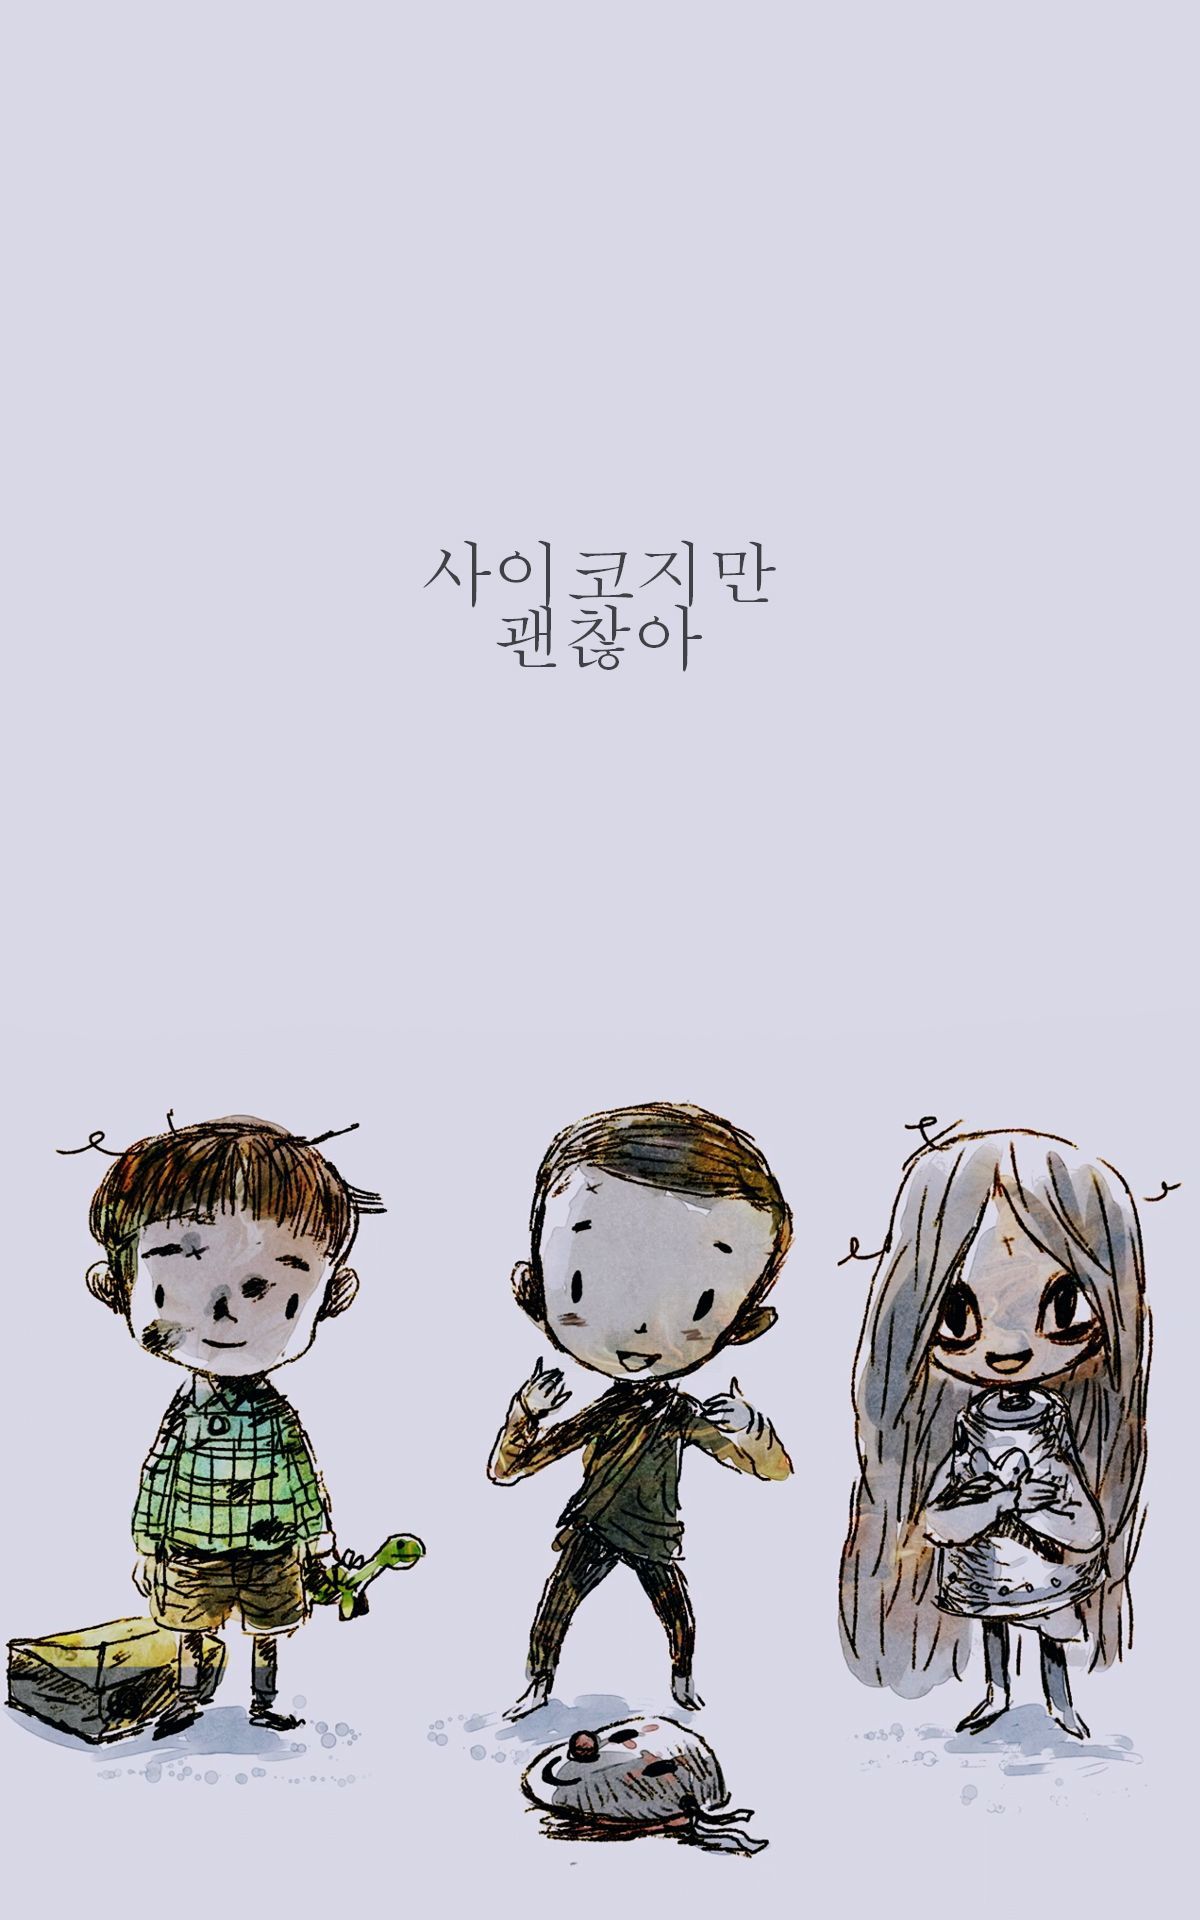 Best Wallpaper it's okay to not be okay image. its okay, kim soo hyun, korean drama